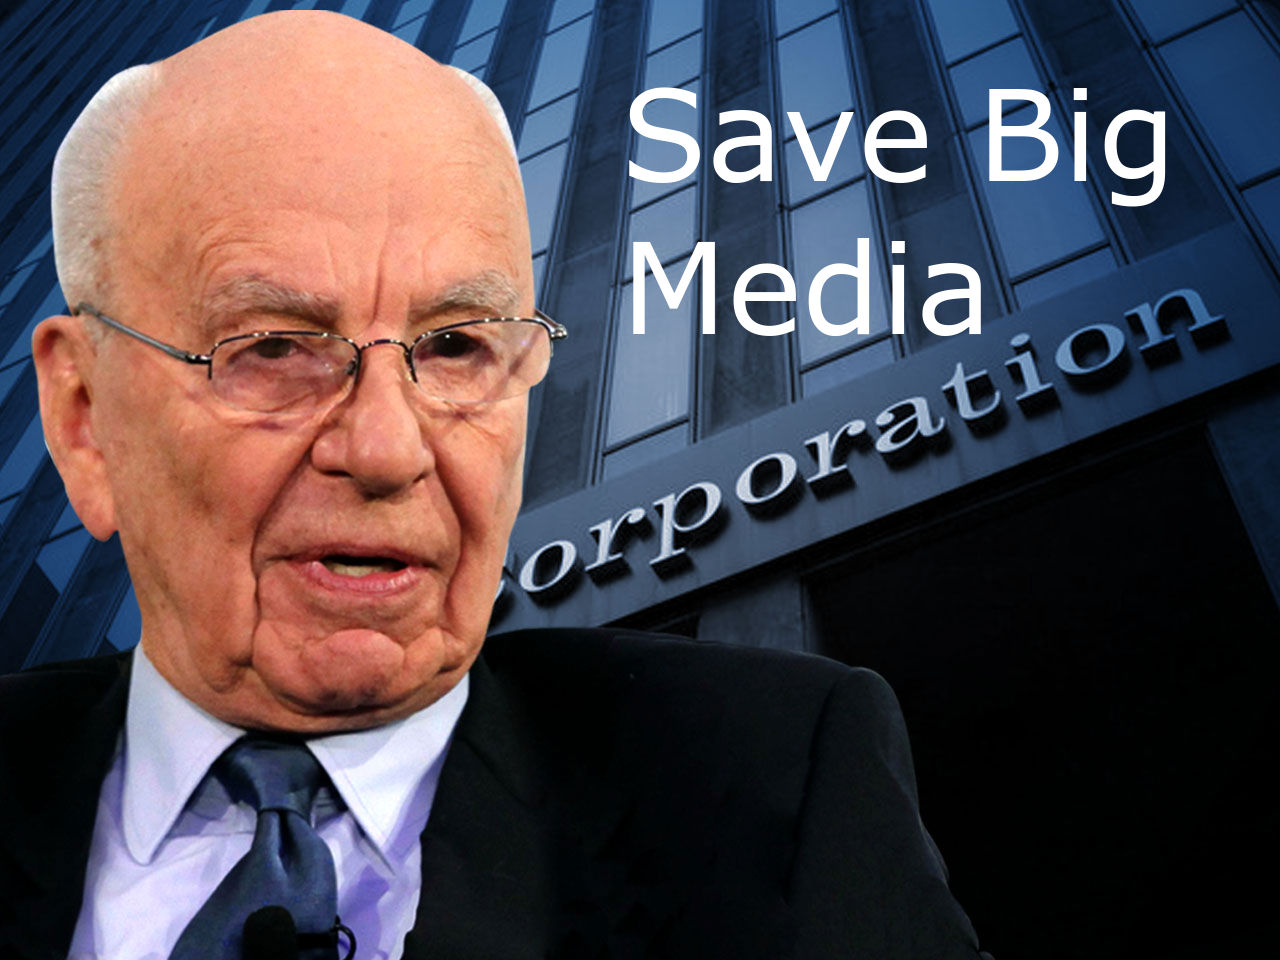 Save Big Media